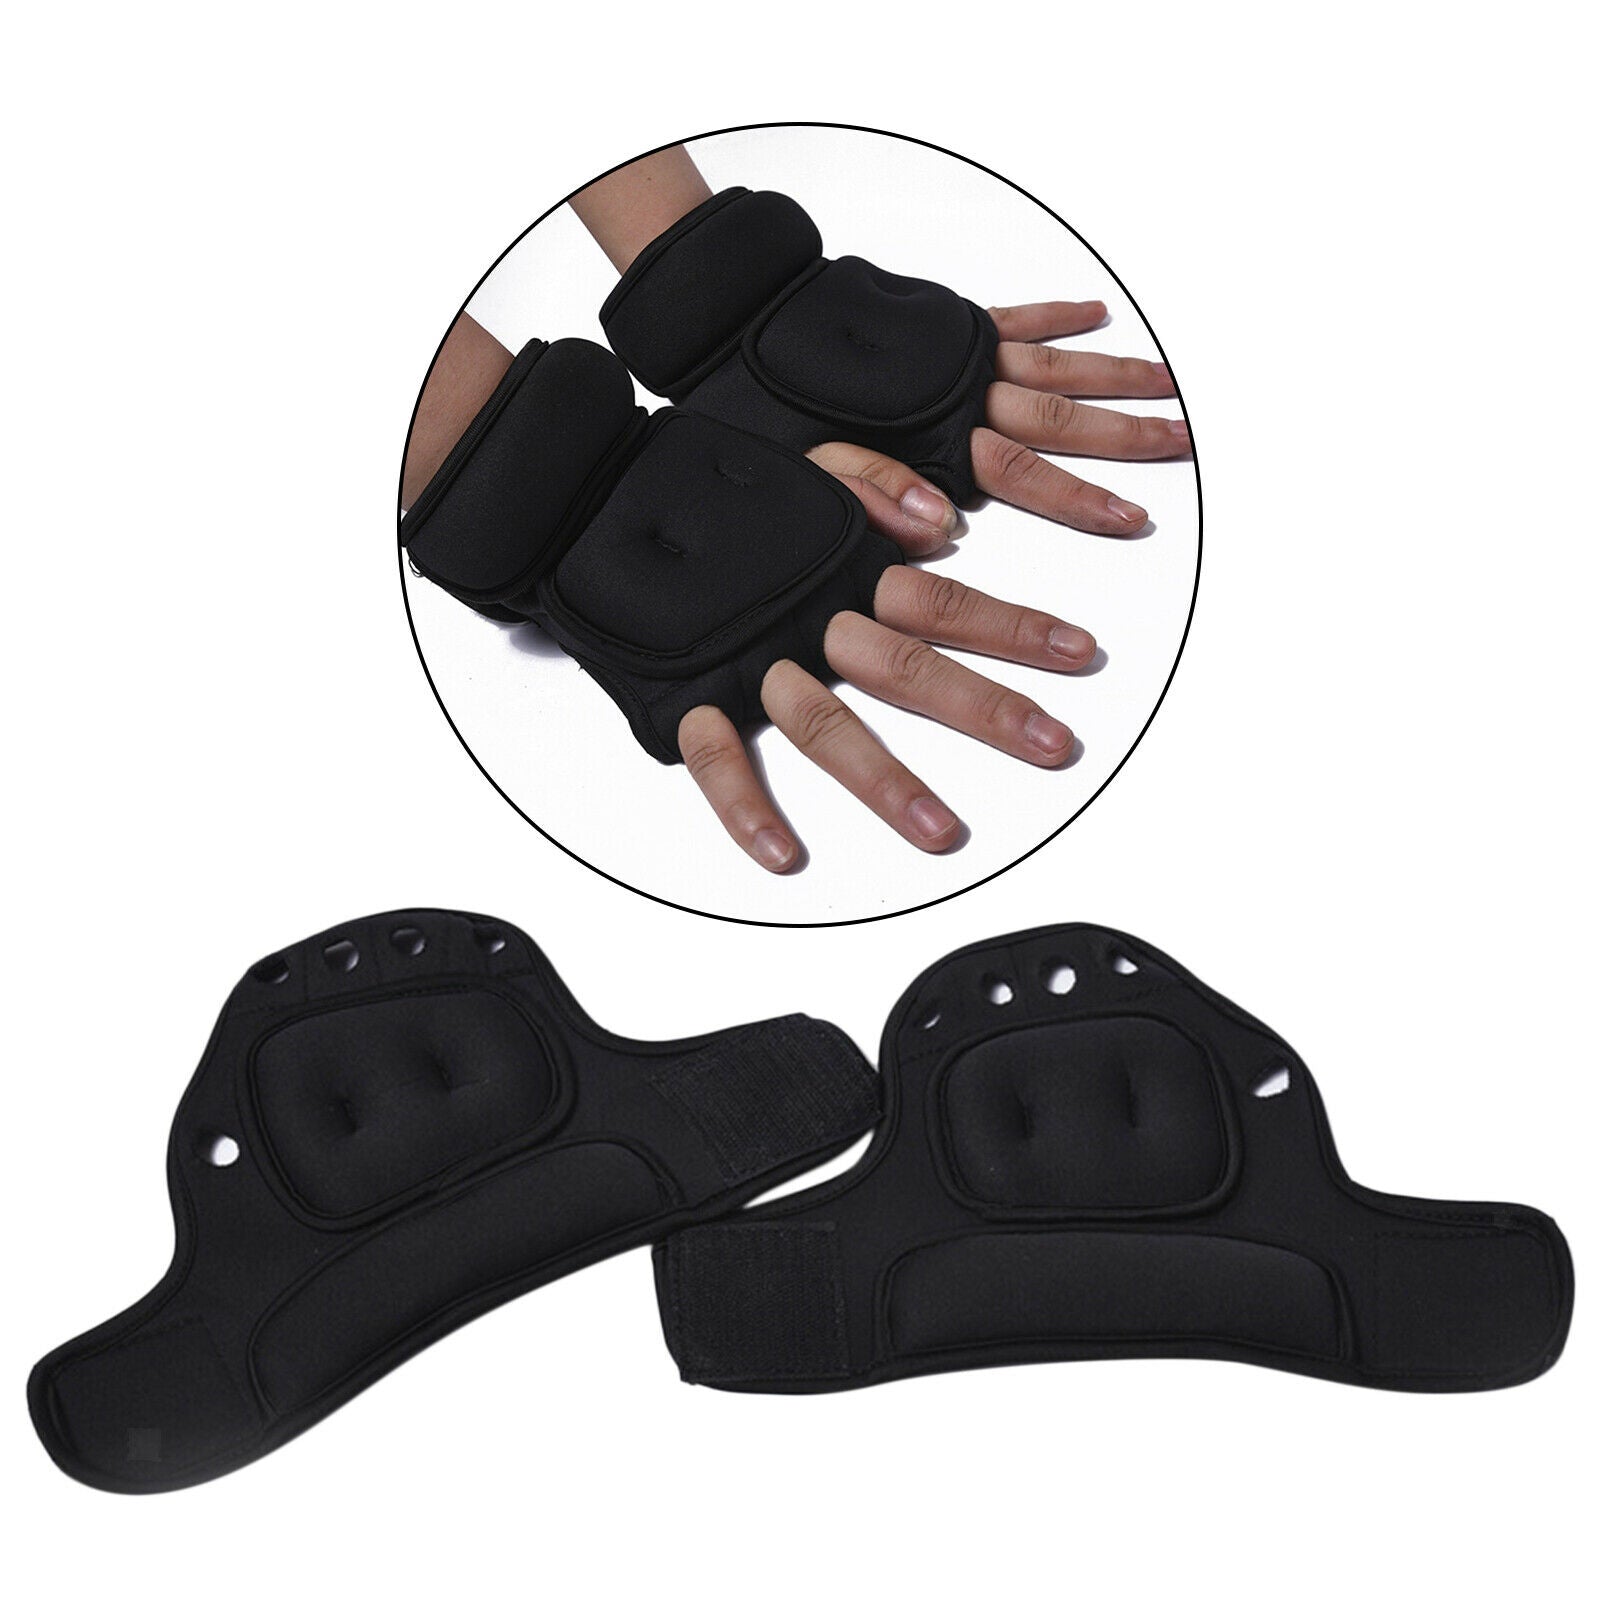 1kg Neoprene Weighted Gloves Sandbag Strength Training Wrist Support Black